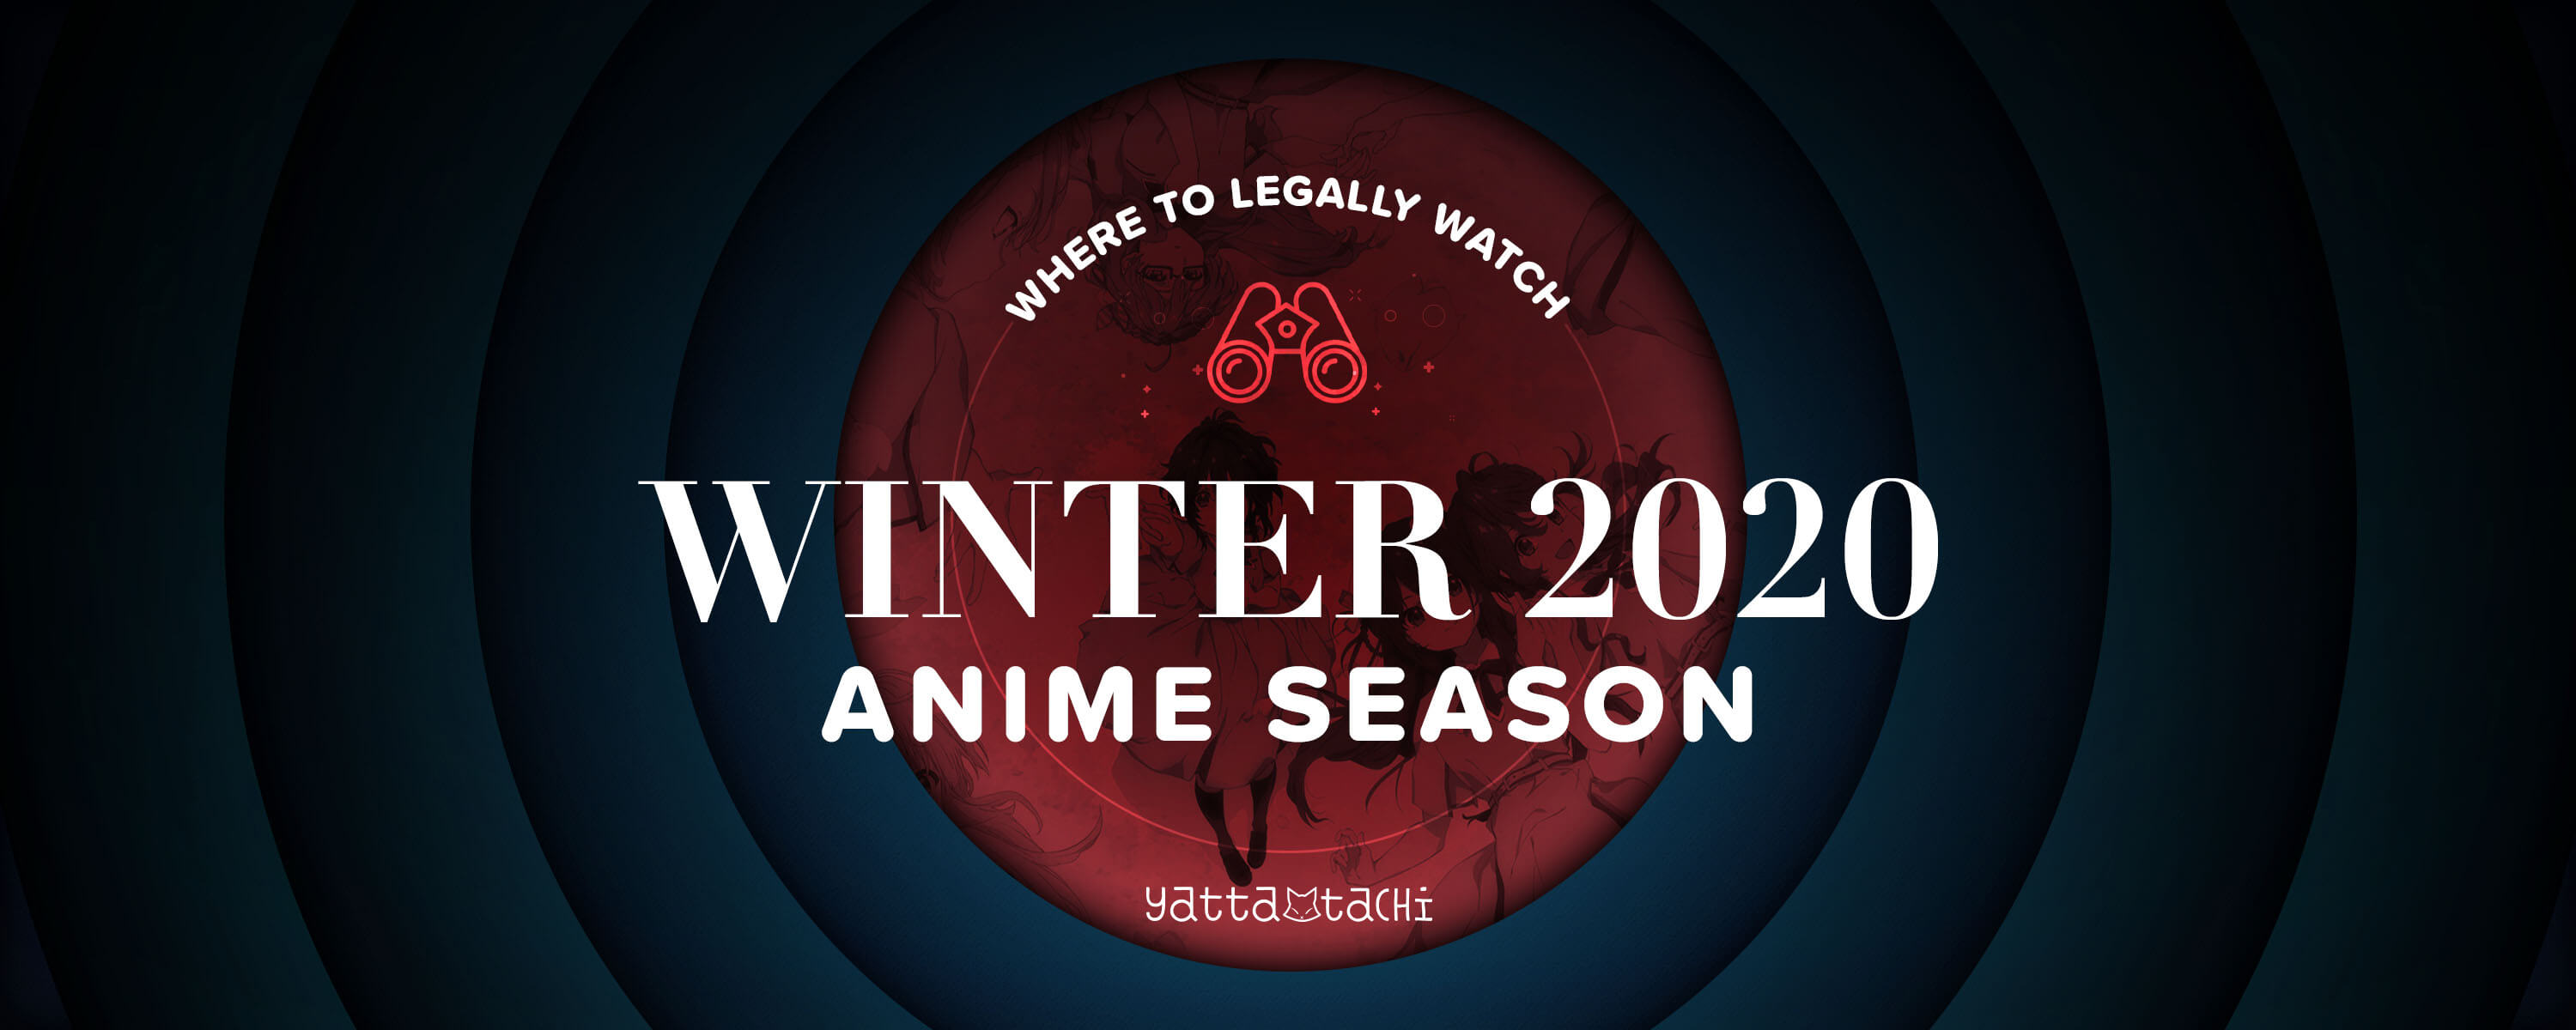 Infinite Dendrogram, Winter Anime 2020